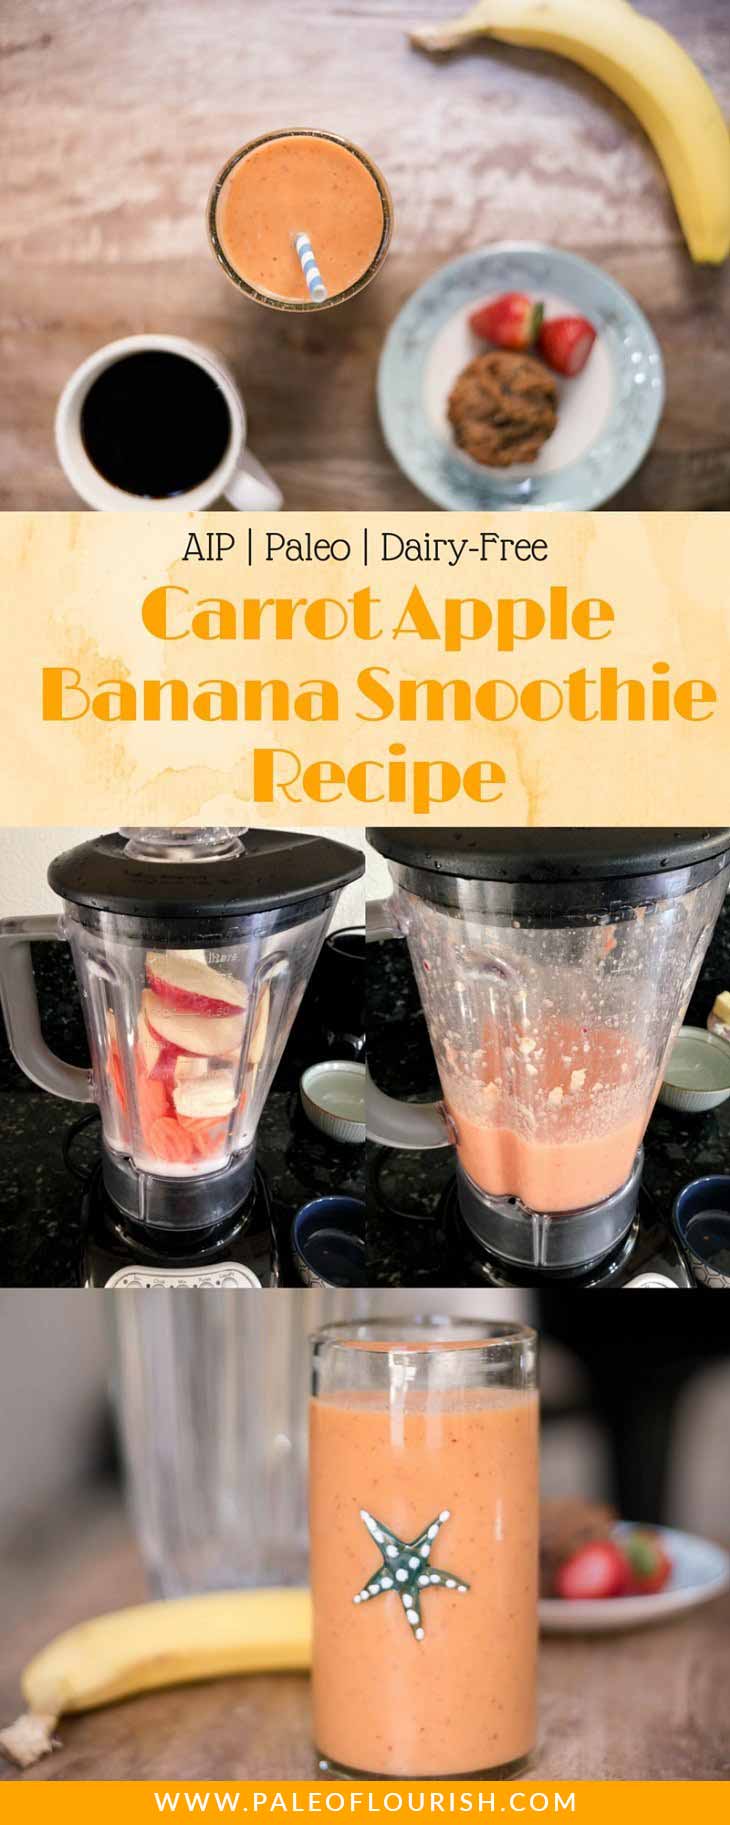 Carrot Apple Banana Smoothie Recipe [AIP, Paleo, Dairy-Free] #paleo #recipes #gluten-free URL https://paleoflourish.com/carrot-apple-banana-smoothie-recipe-aip-paleo